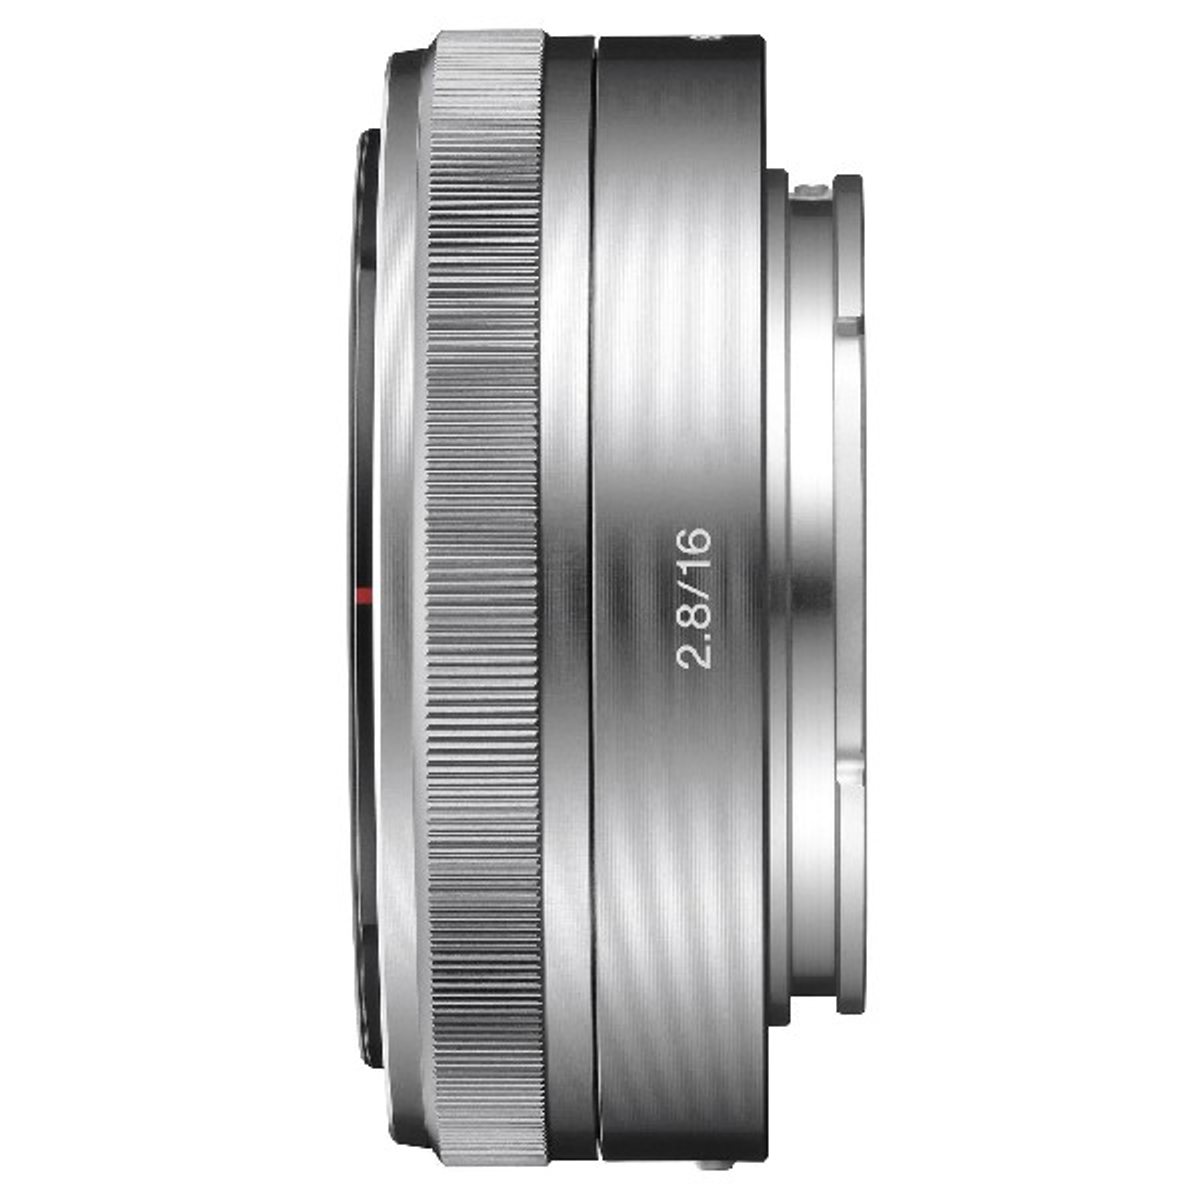 SONY (Objektiv f/2.8 Blende 16 SEL ASPH, Sony 16F28 für E-Mount, - F2,8/16MM E-MOUNT mm Silber) Circulare